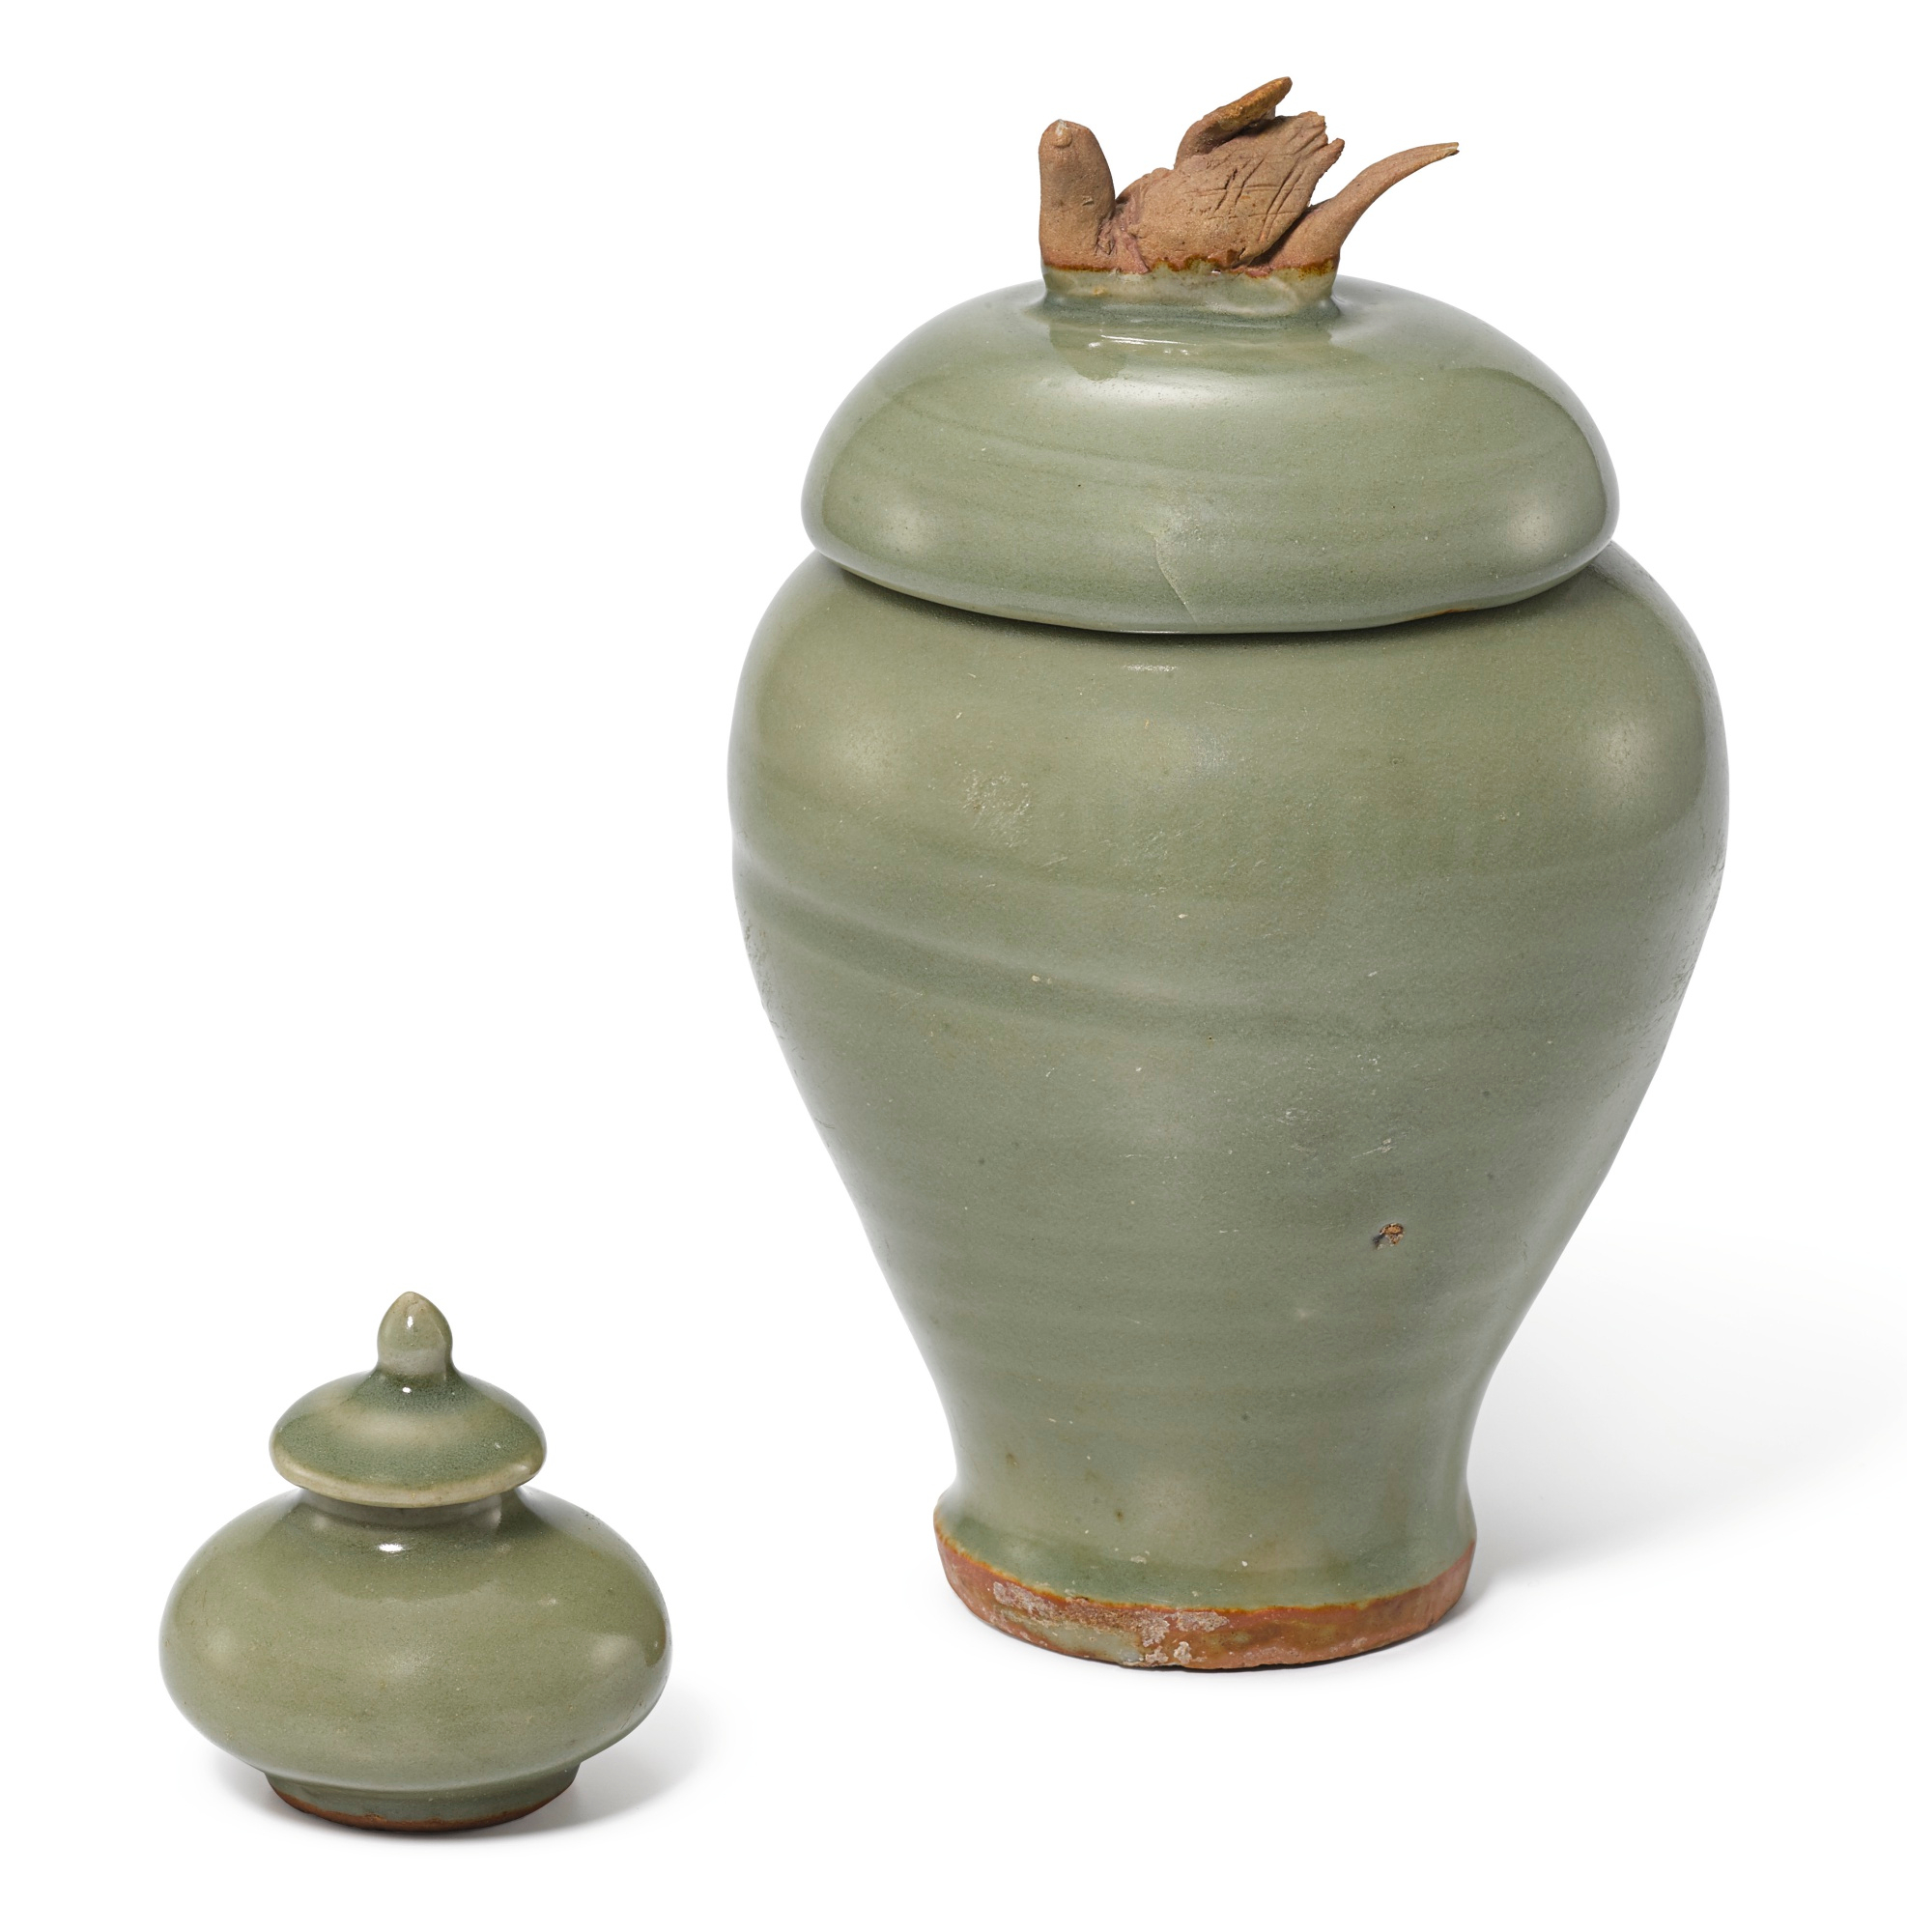 A Longquan celadon jar and cover, Yuan dynasty and a miniature Longquan celadon jar and cover, Ming dynasty, 15th century